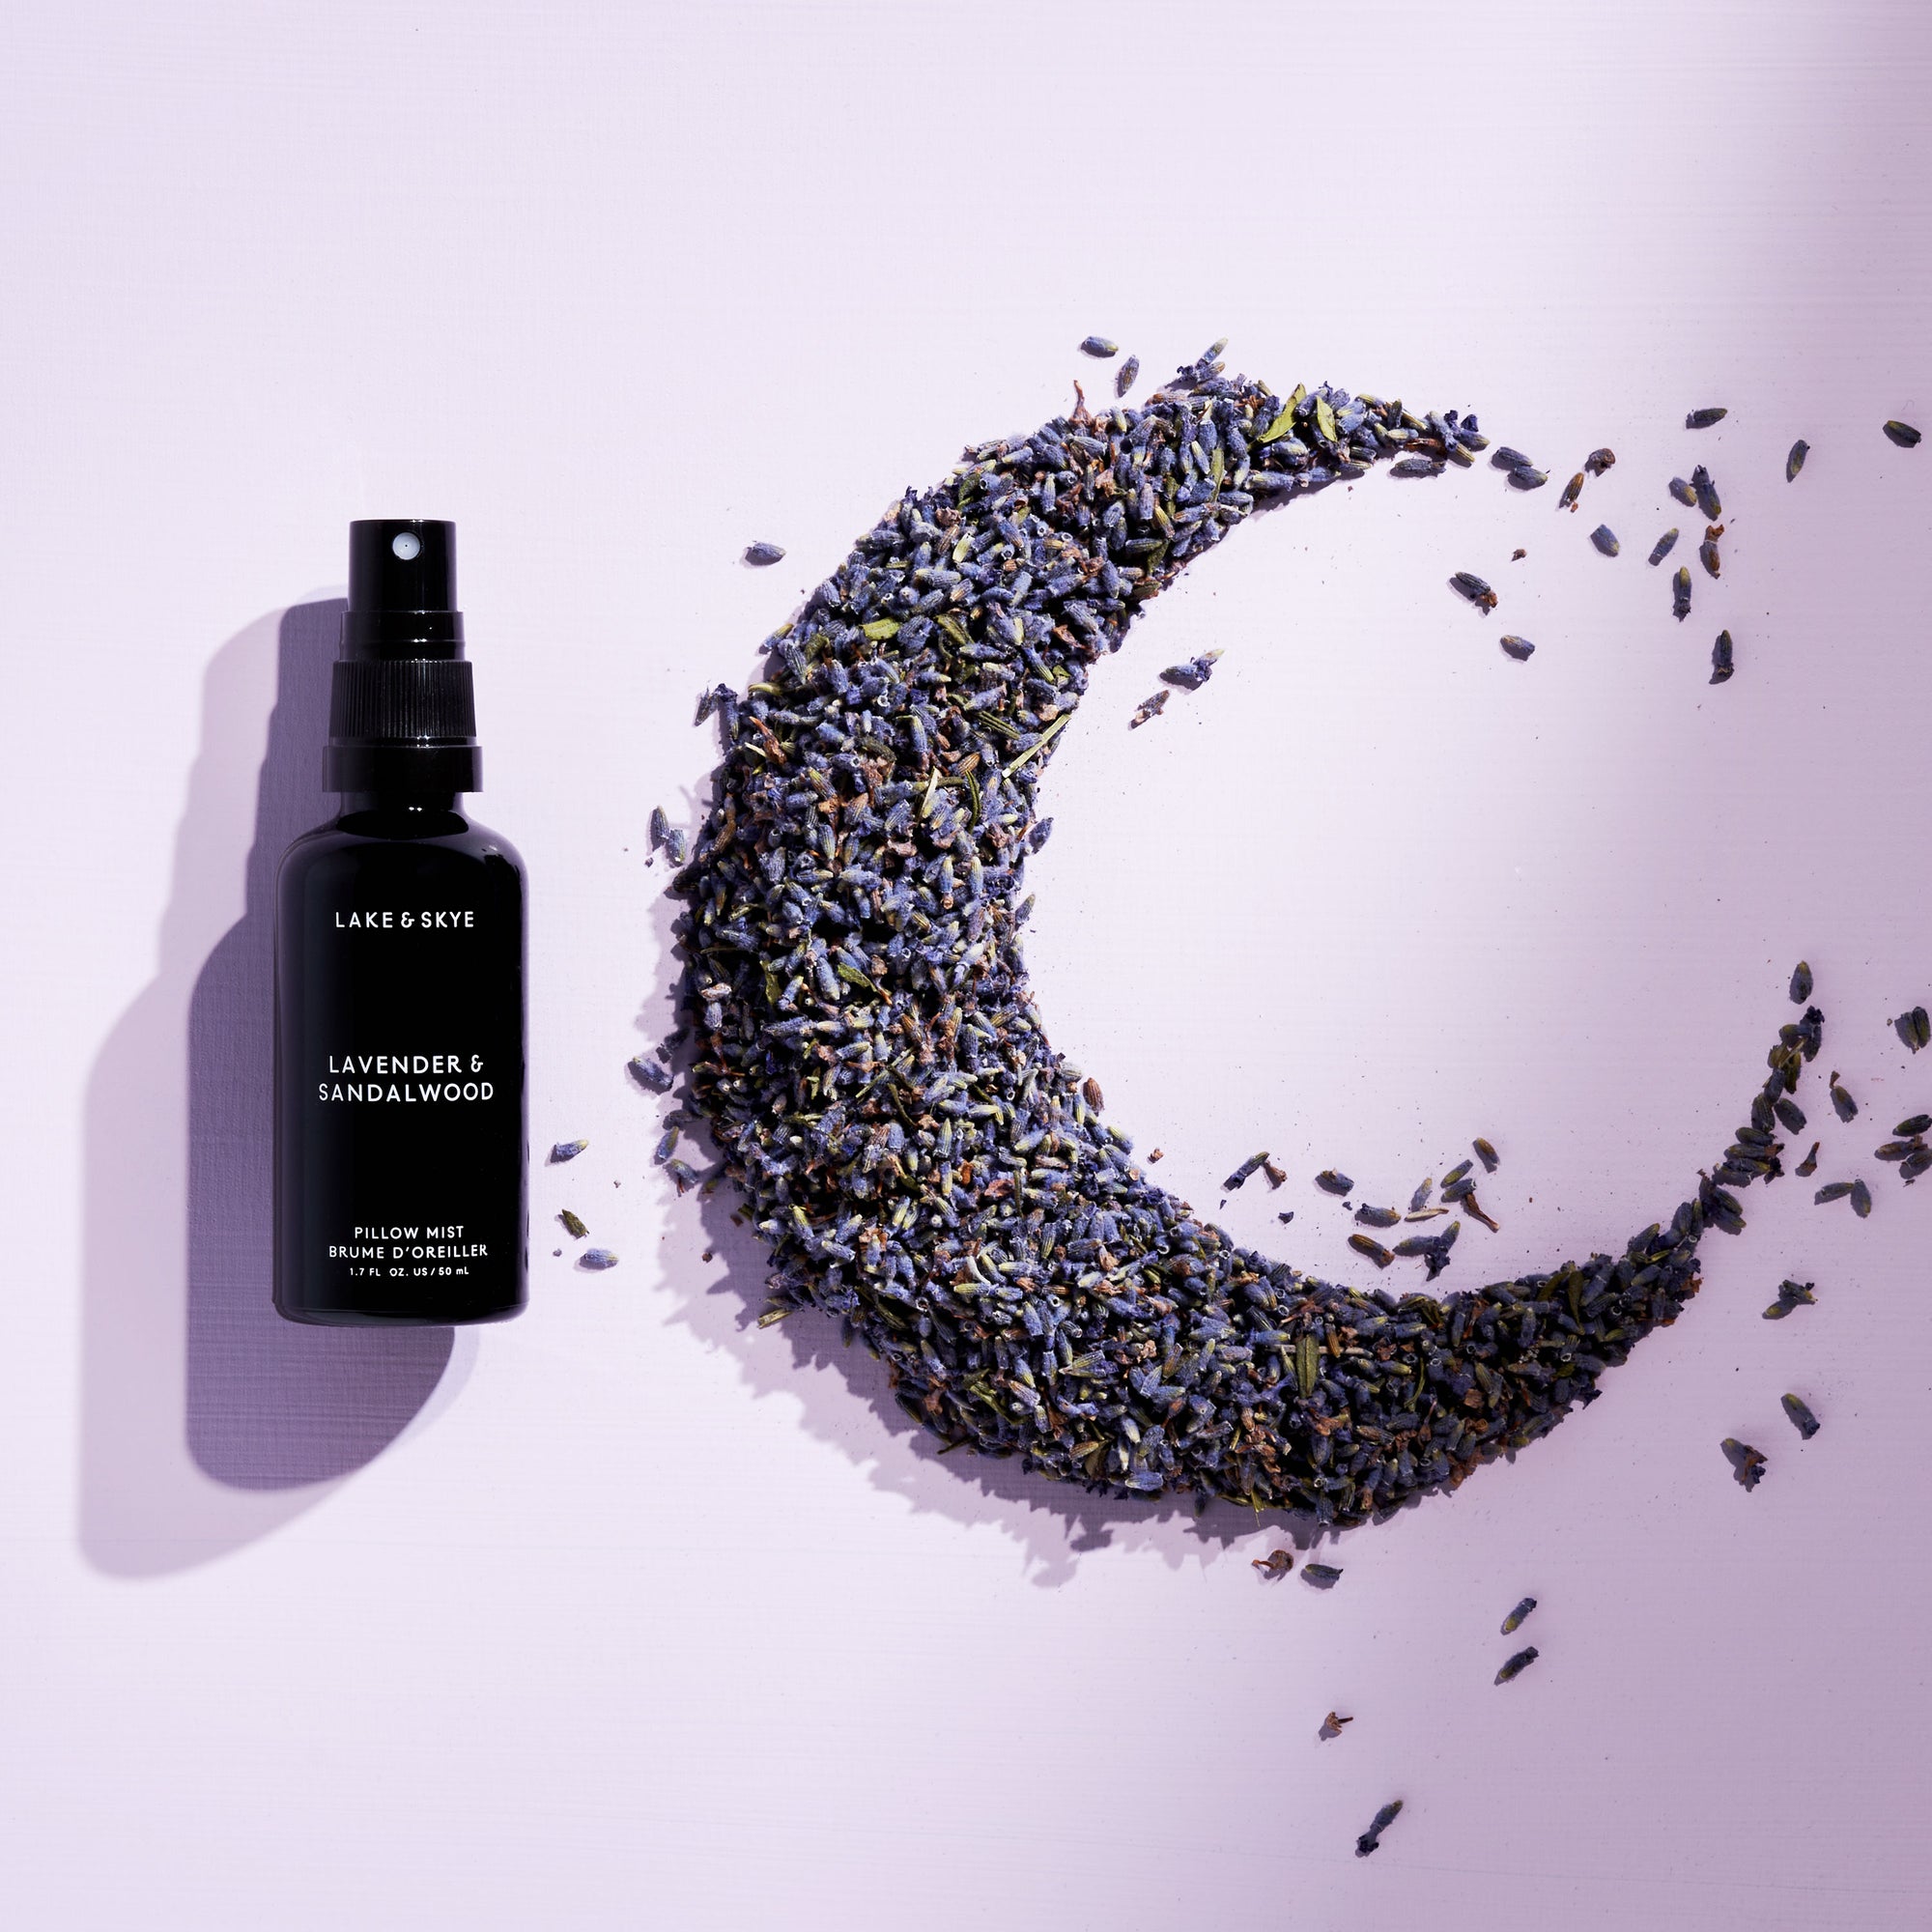 Lavender Pillow Spray and Sleep Spray | 100% Natural | Joy Lane Farm